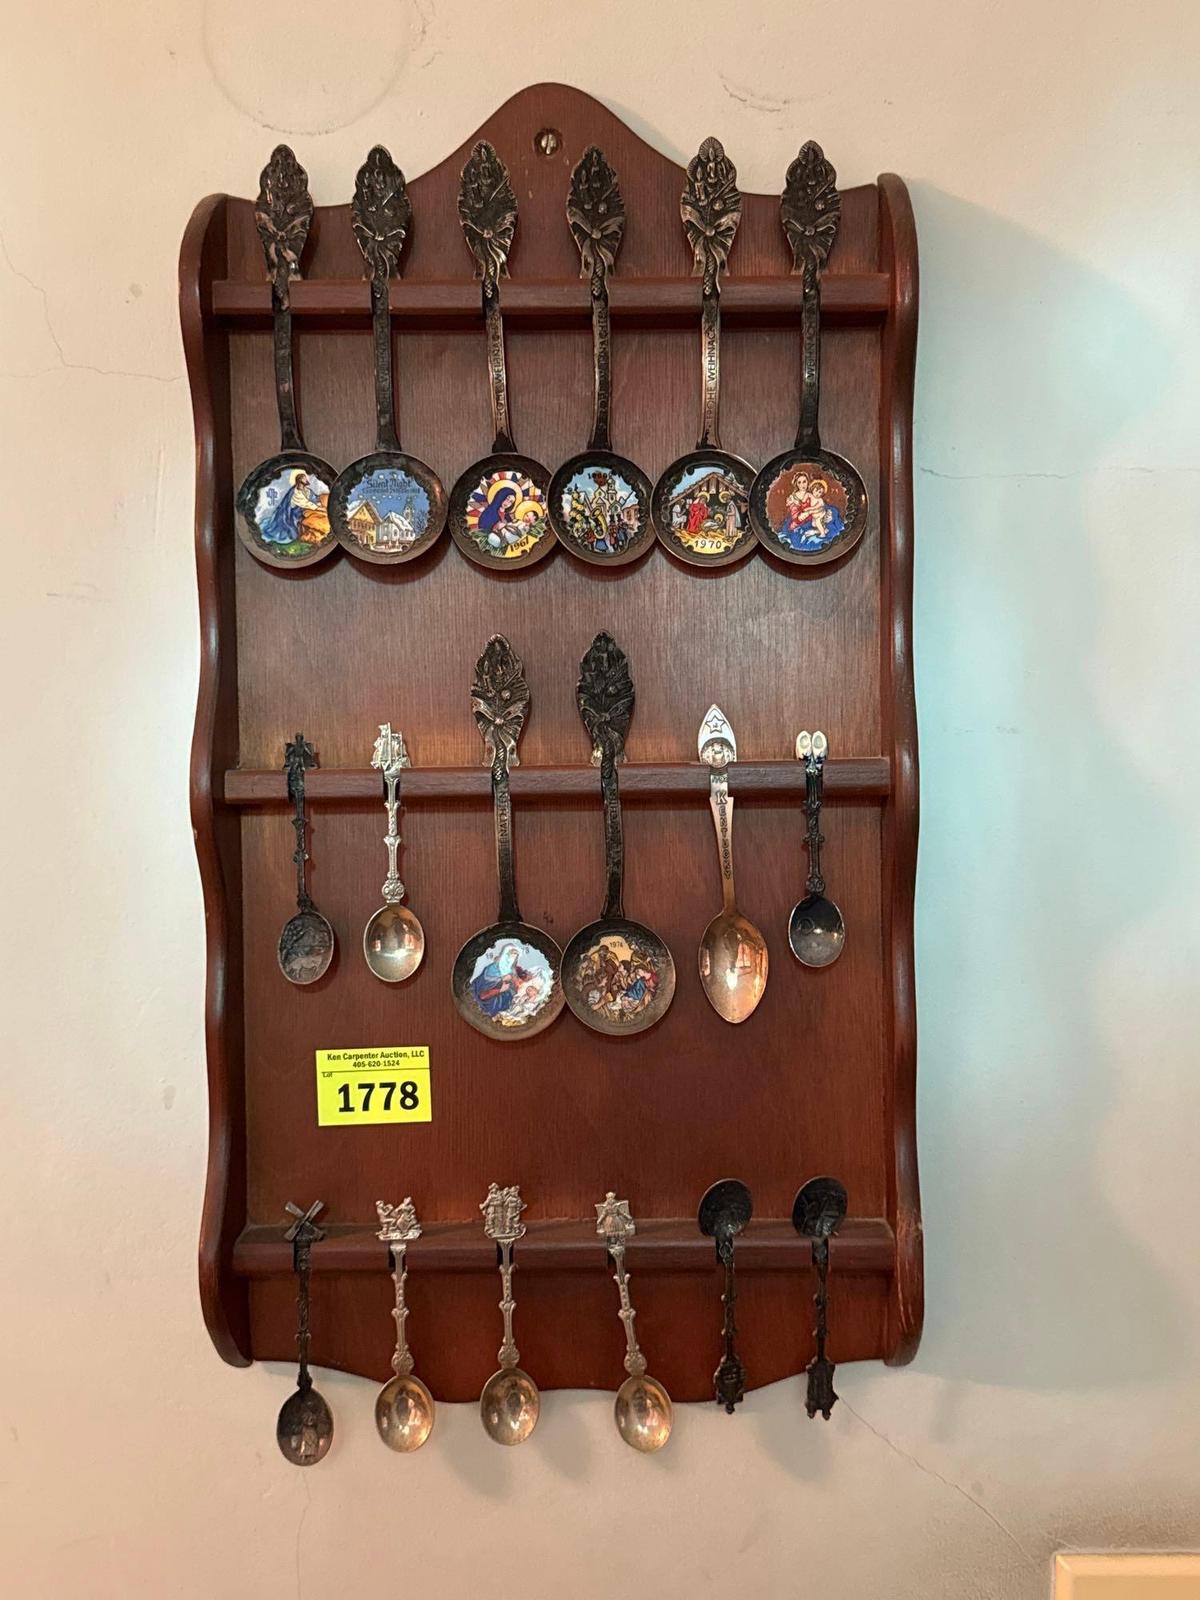 Souvenir Spoon Display Rack with Spoons